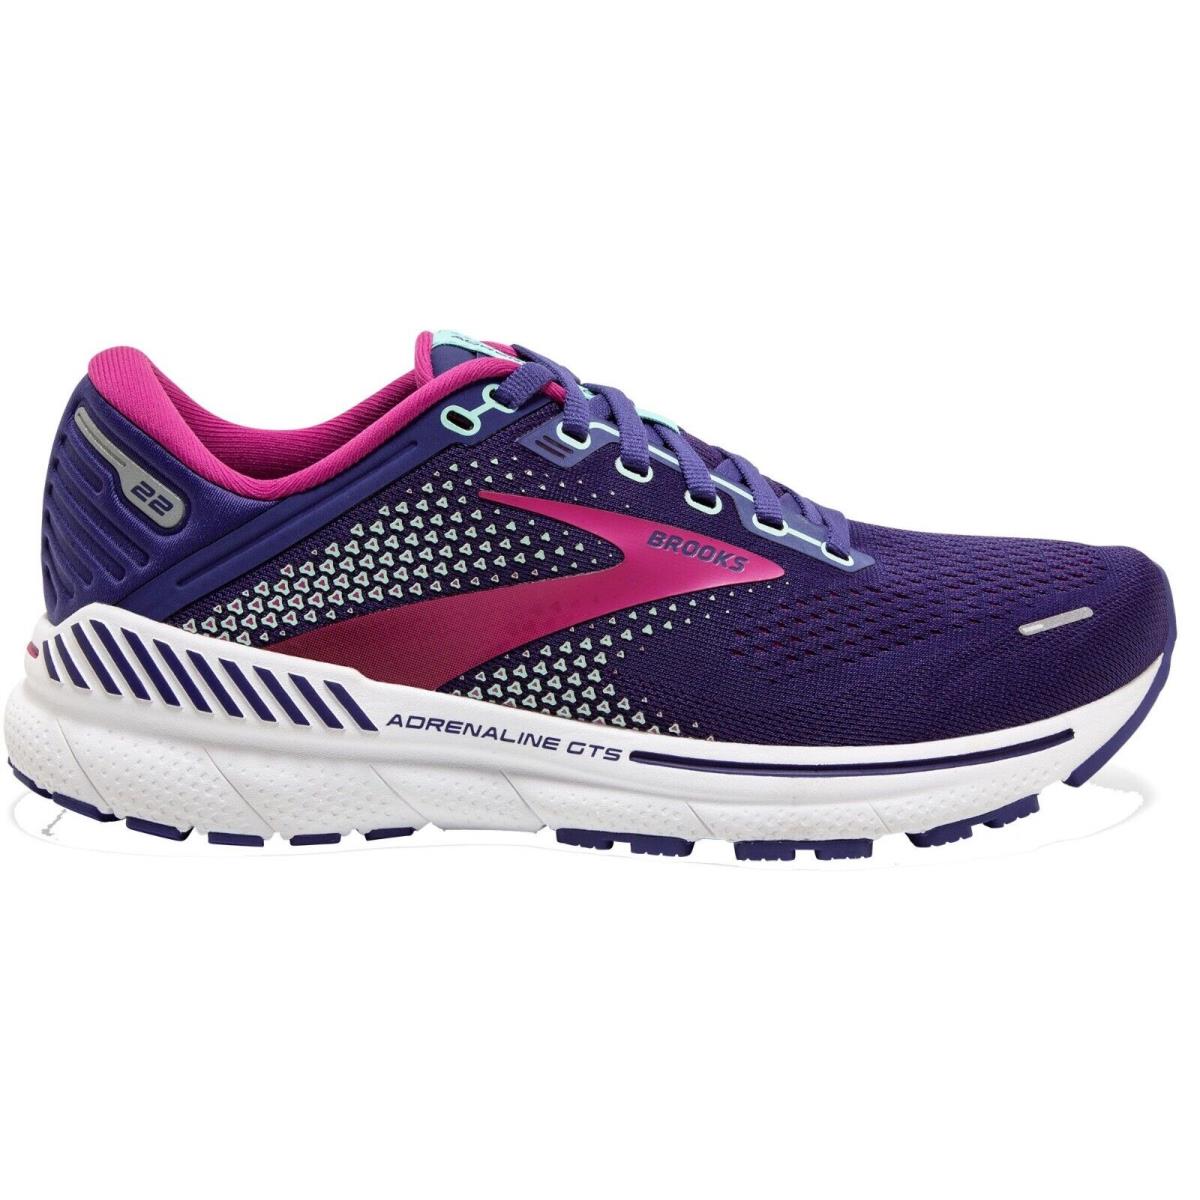 Brooks Adrenaline Gts 22 Women`s Running Shoes Navy Purple Pink US Size 6-11 - Navy/Yucca/Pink